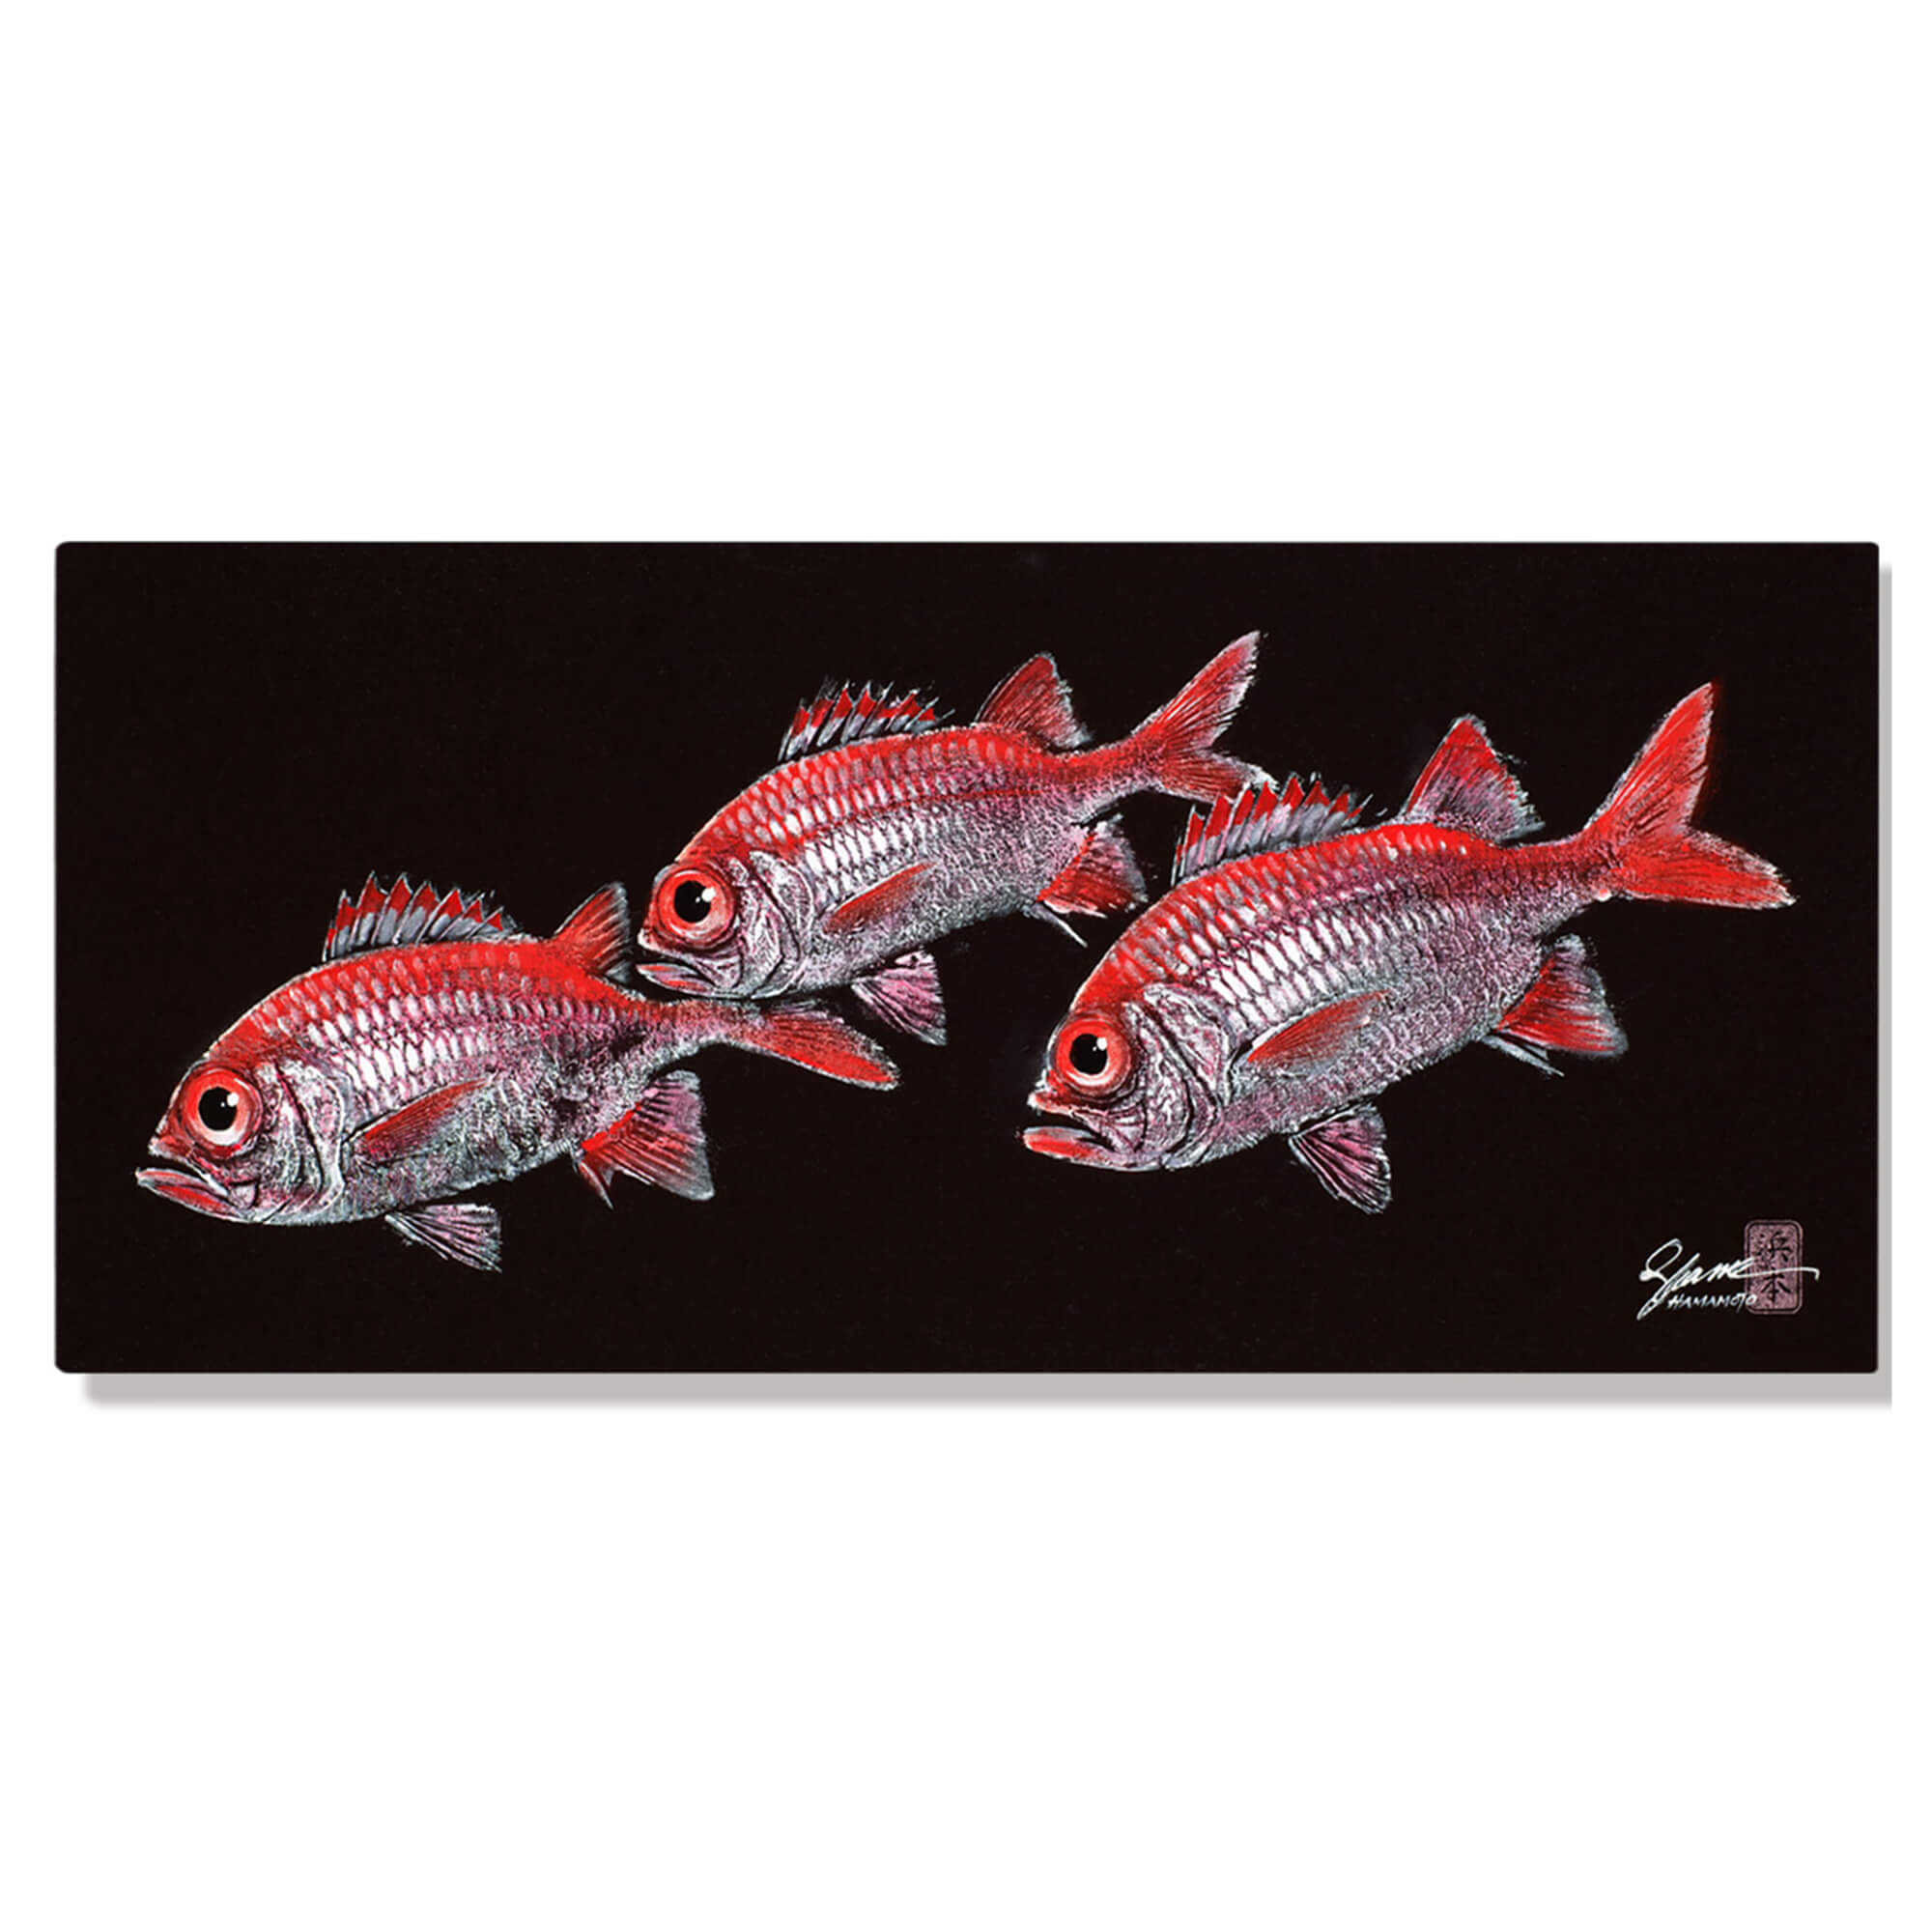 Metal print of Menpachi (also known as Squirrelfish or Soldierfish) by Hawaii gyotaku artist Shane Hamamoto